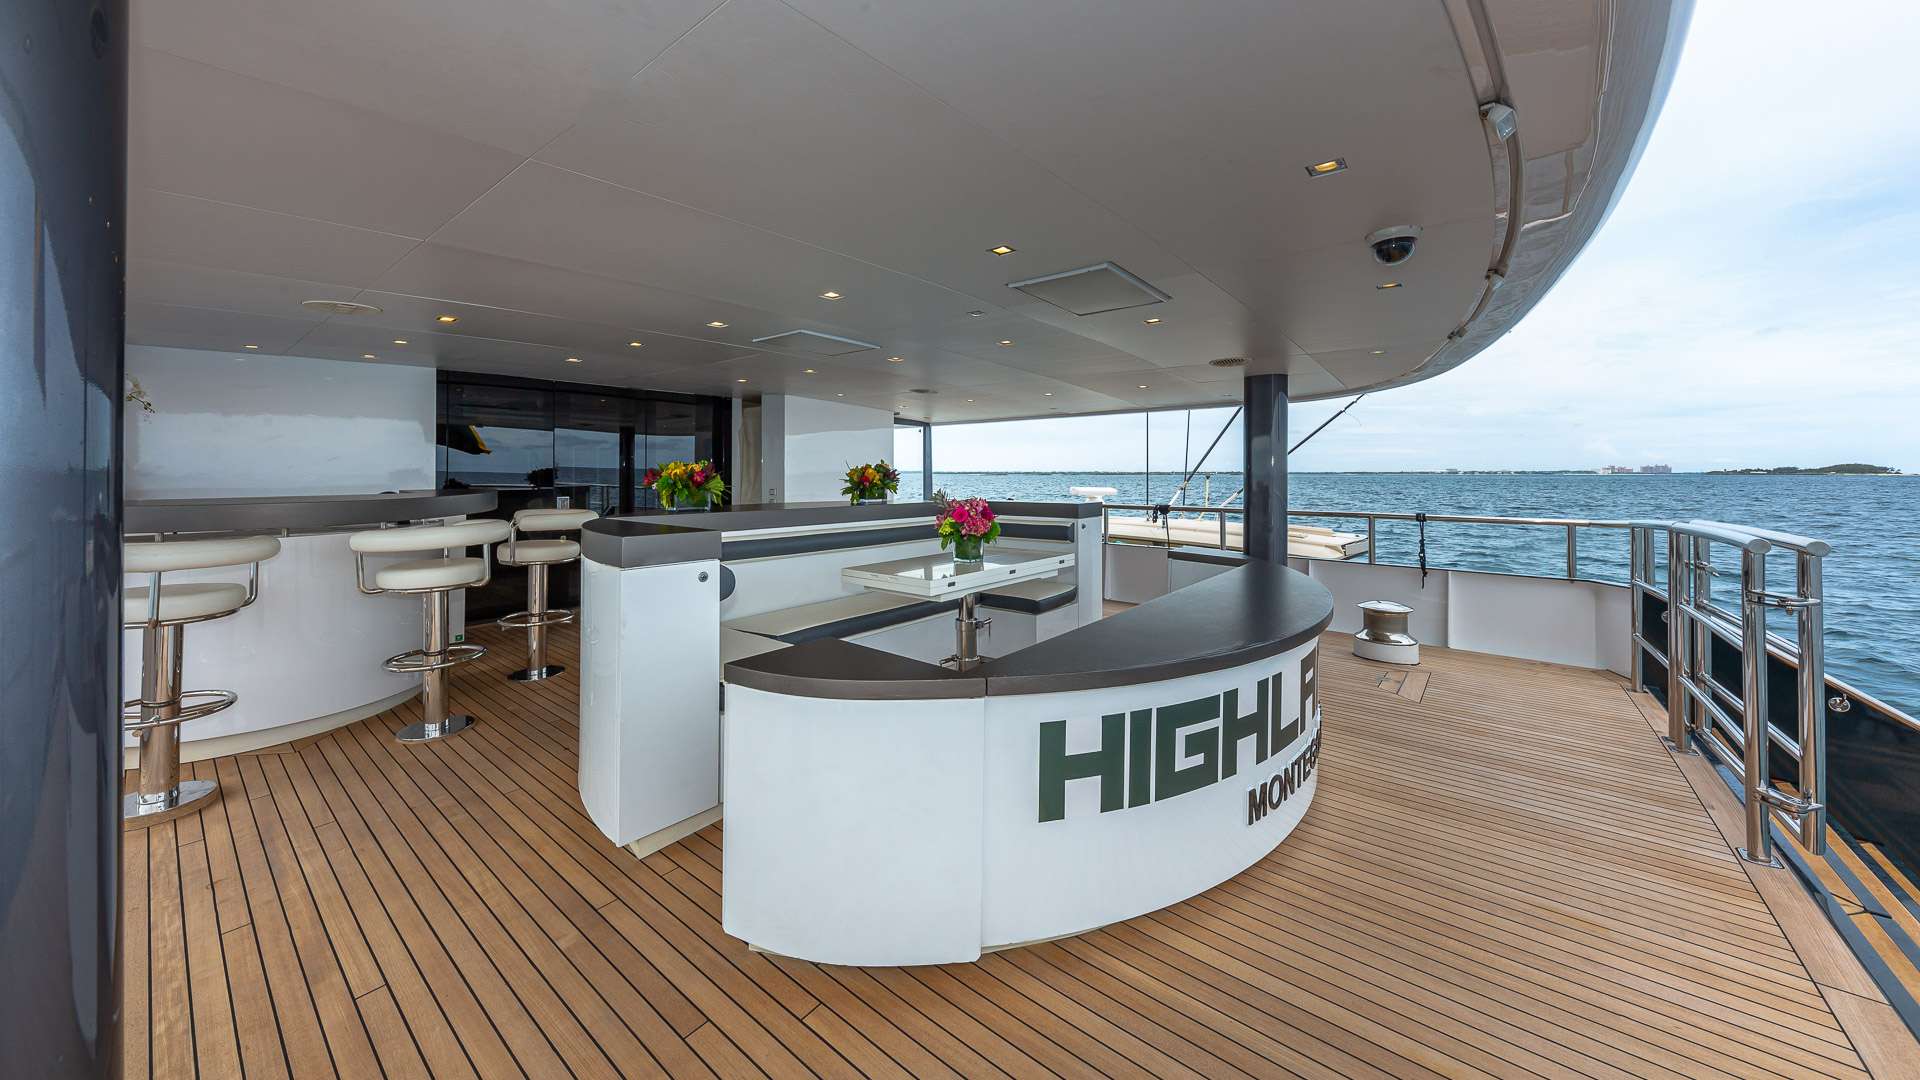 HIGHLANDER - Yacht Charter Cuba & Boat hire in Caribbean, Bahamas, Florida East Coast, Cuba, Dominican Republic, Turks and Caicos, USA South East 5